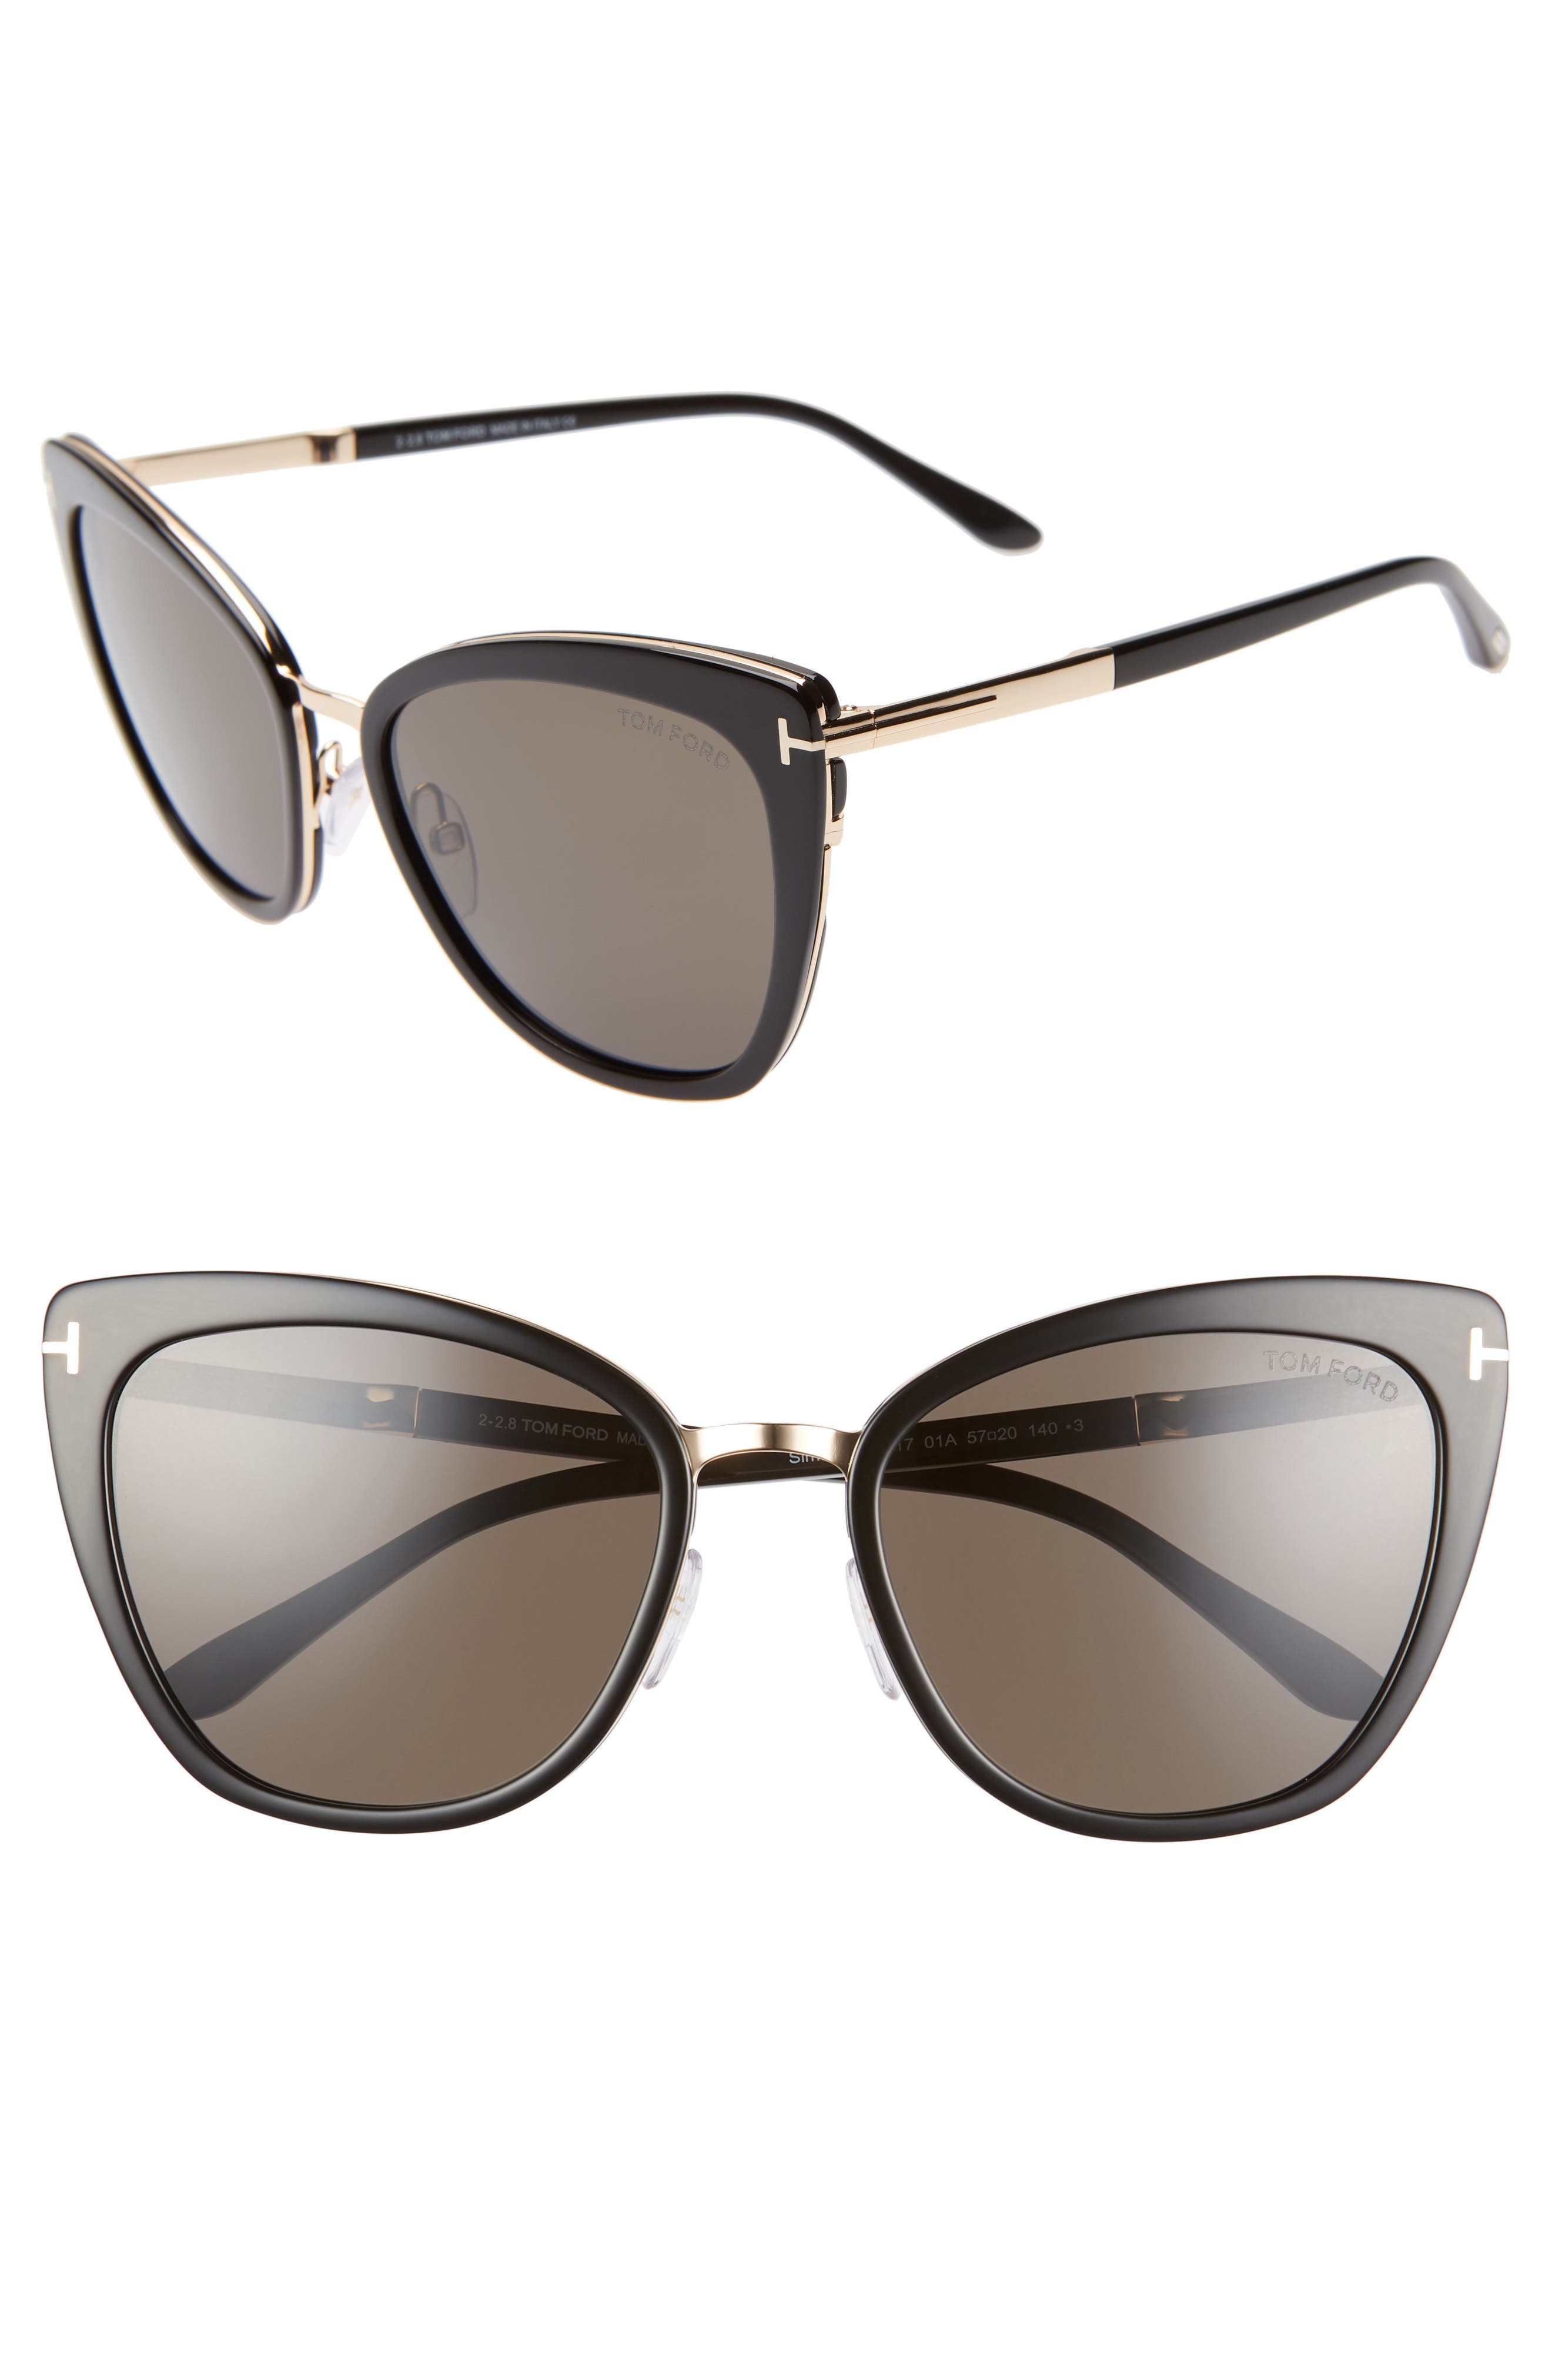 Tom Ford Simona 56mm Cat Eye Sunglasses in Black/Rose Gold/Smoke at Nordstrom